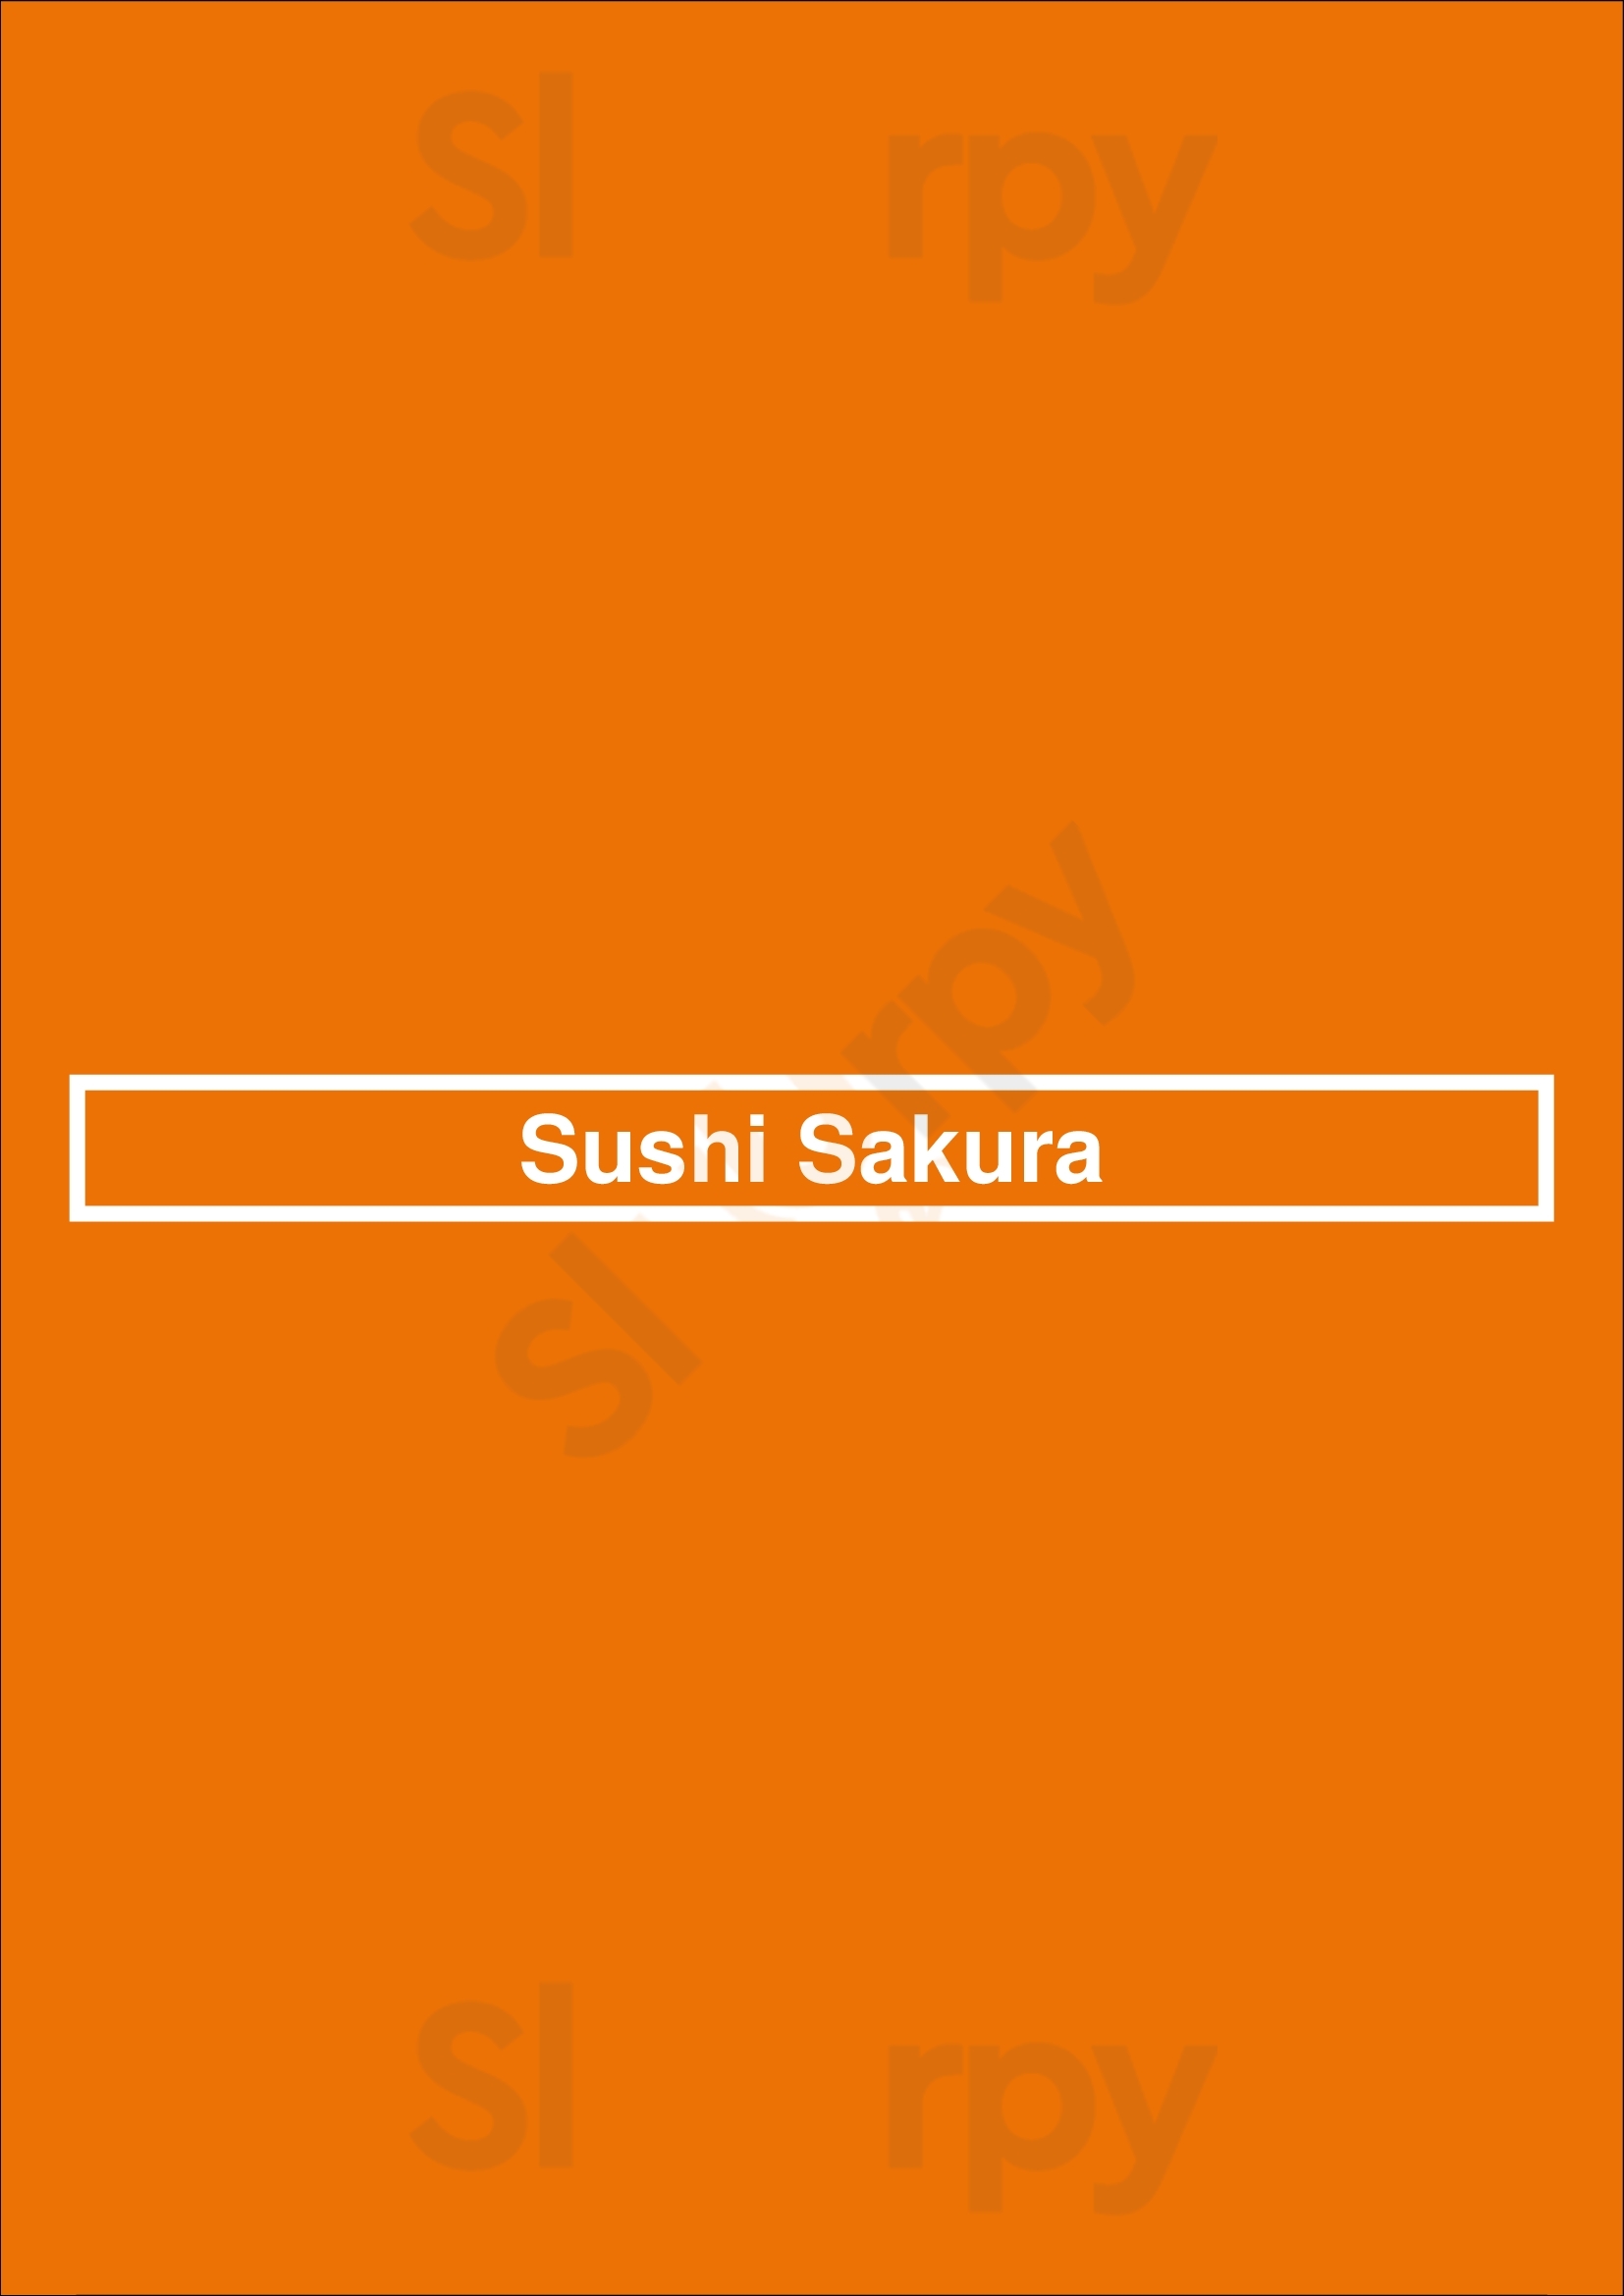 Sushi Sakura Buenos Aires Menu - 1